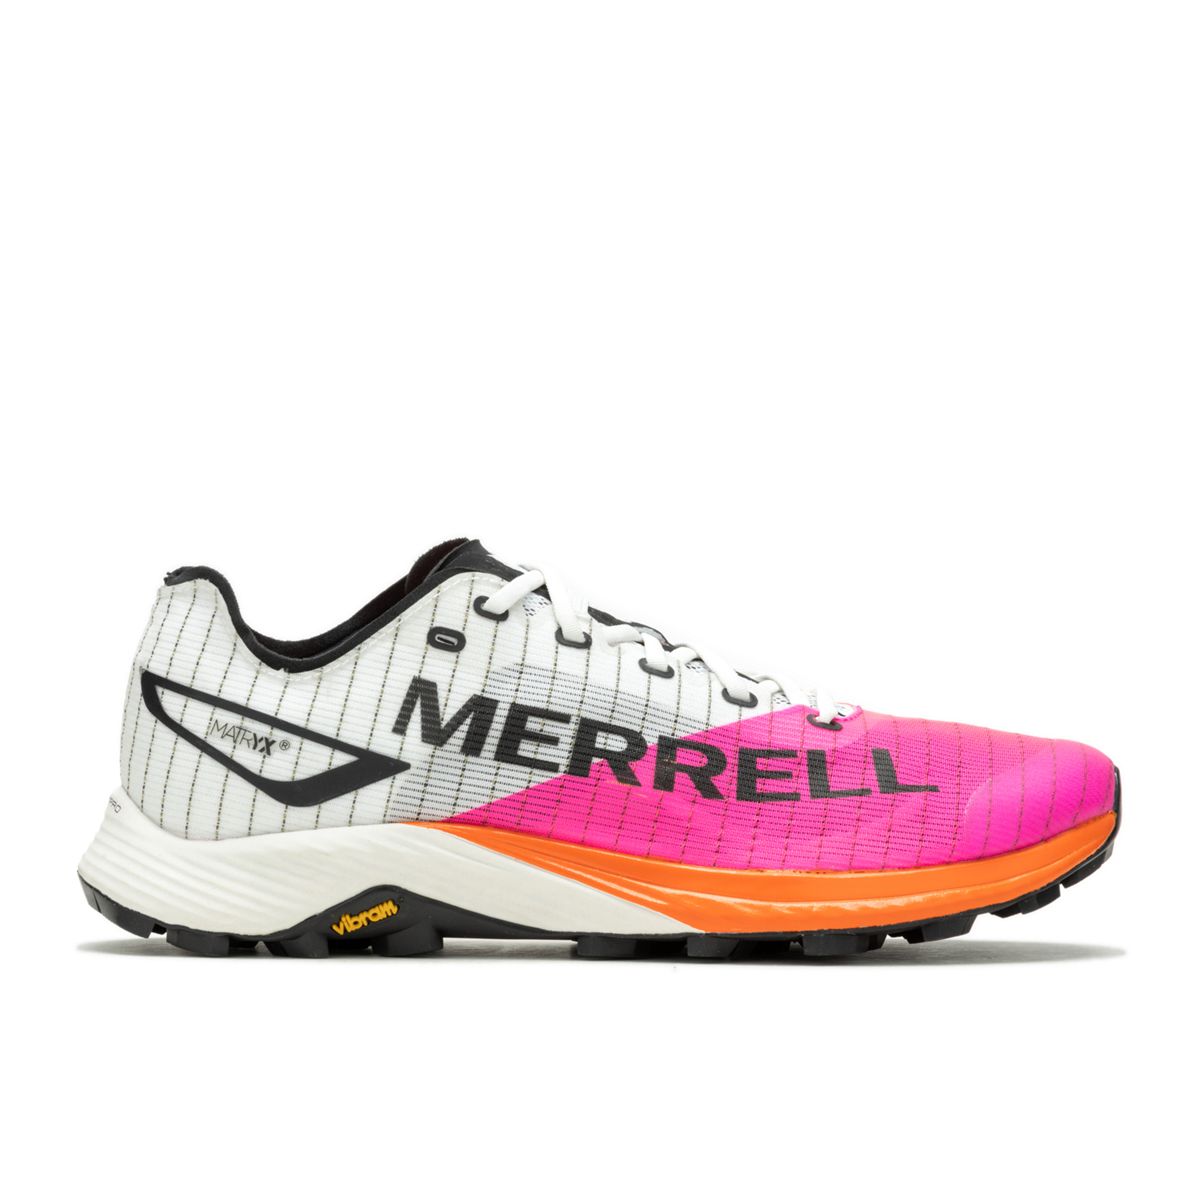 Zapatillas Running Merrell hombre trail - Ofertas para comprar